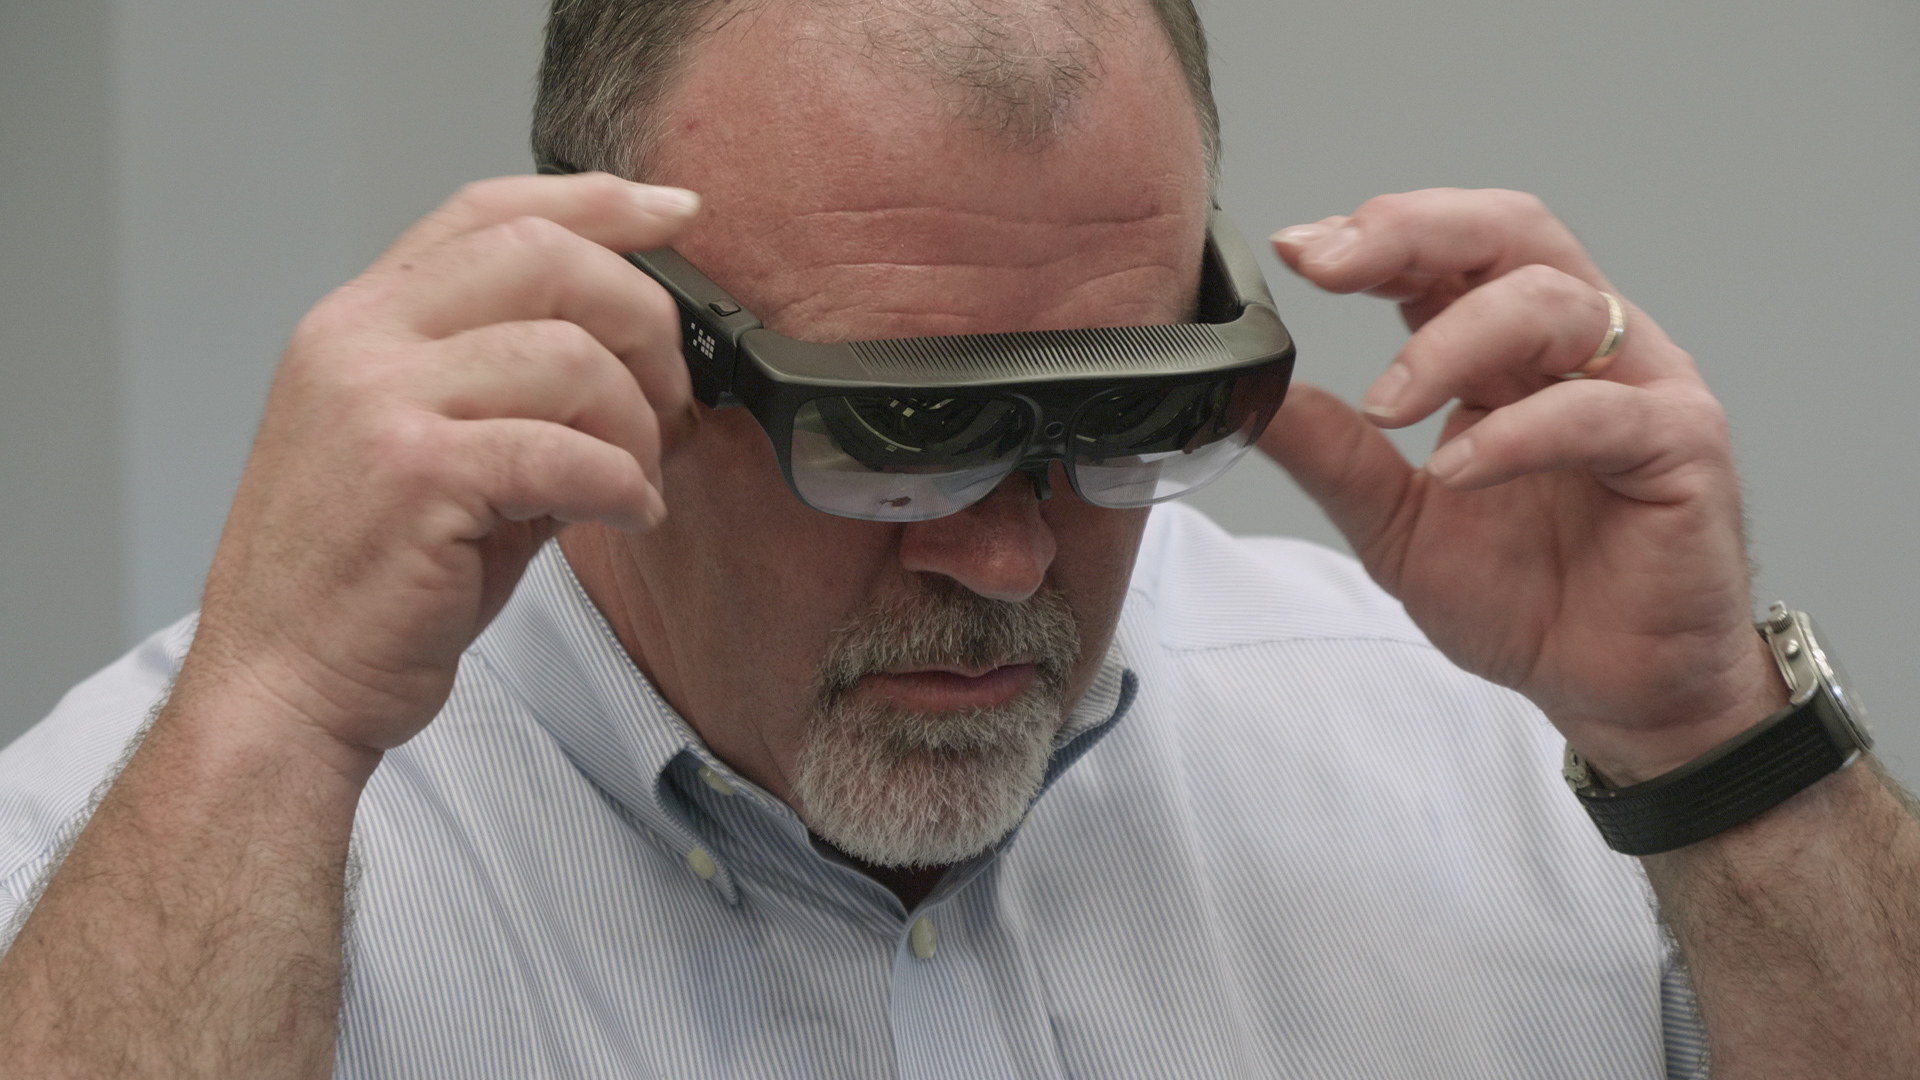 Porsche augmented reality glasses for technicians